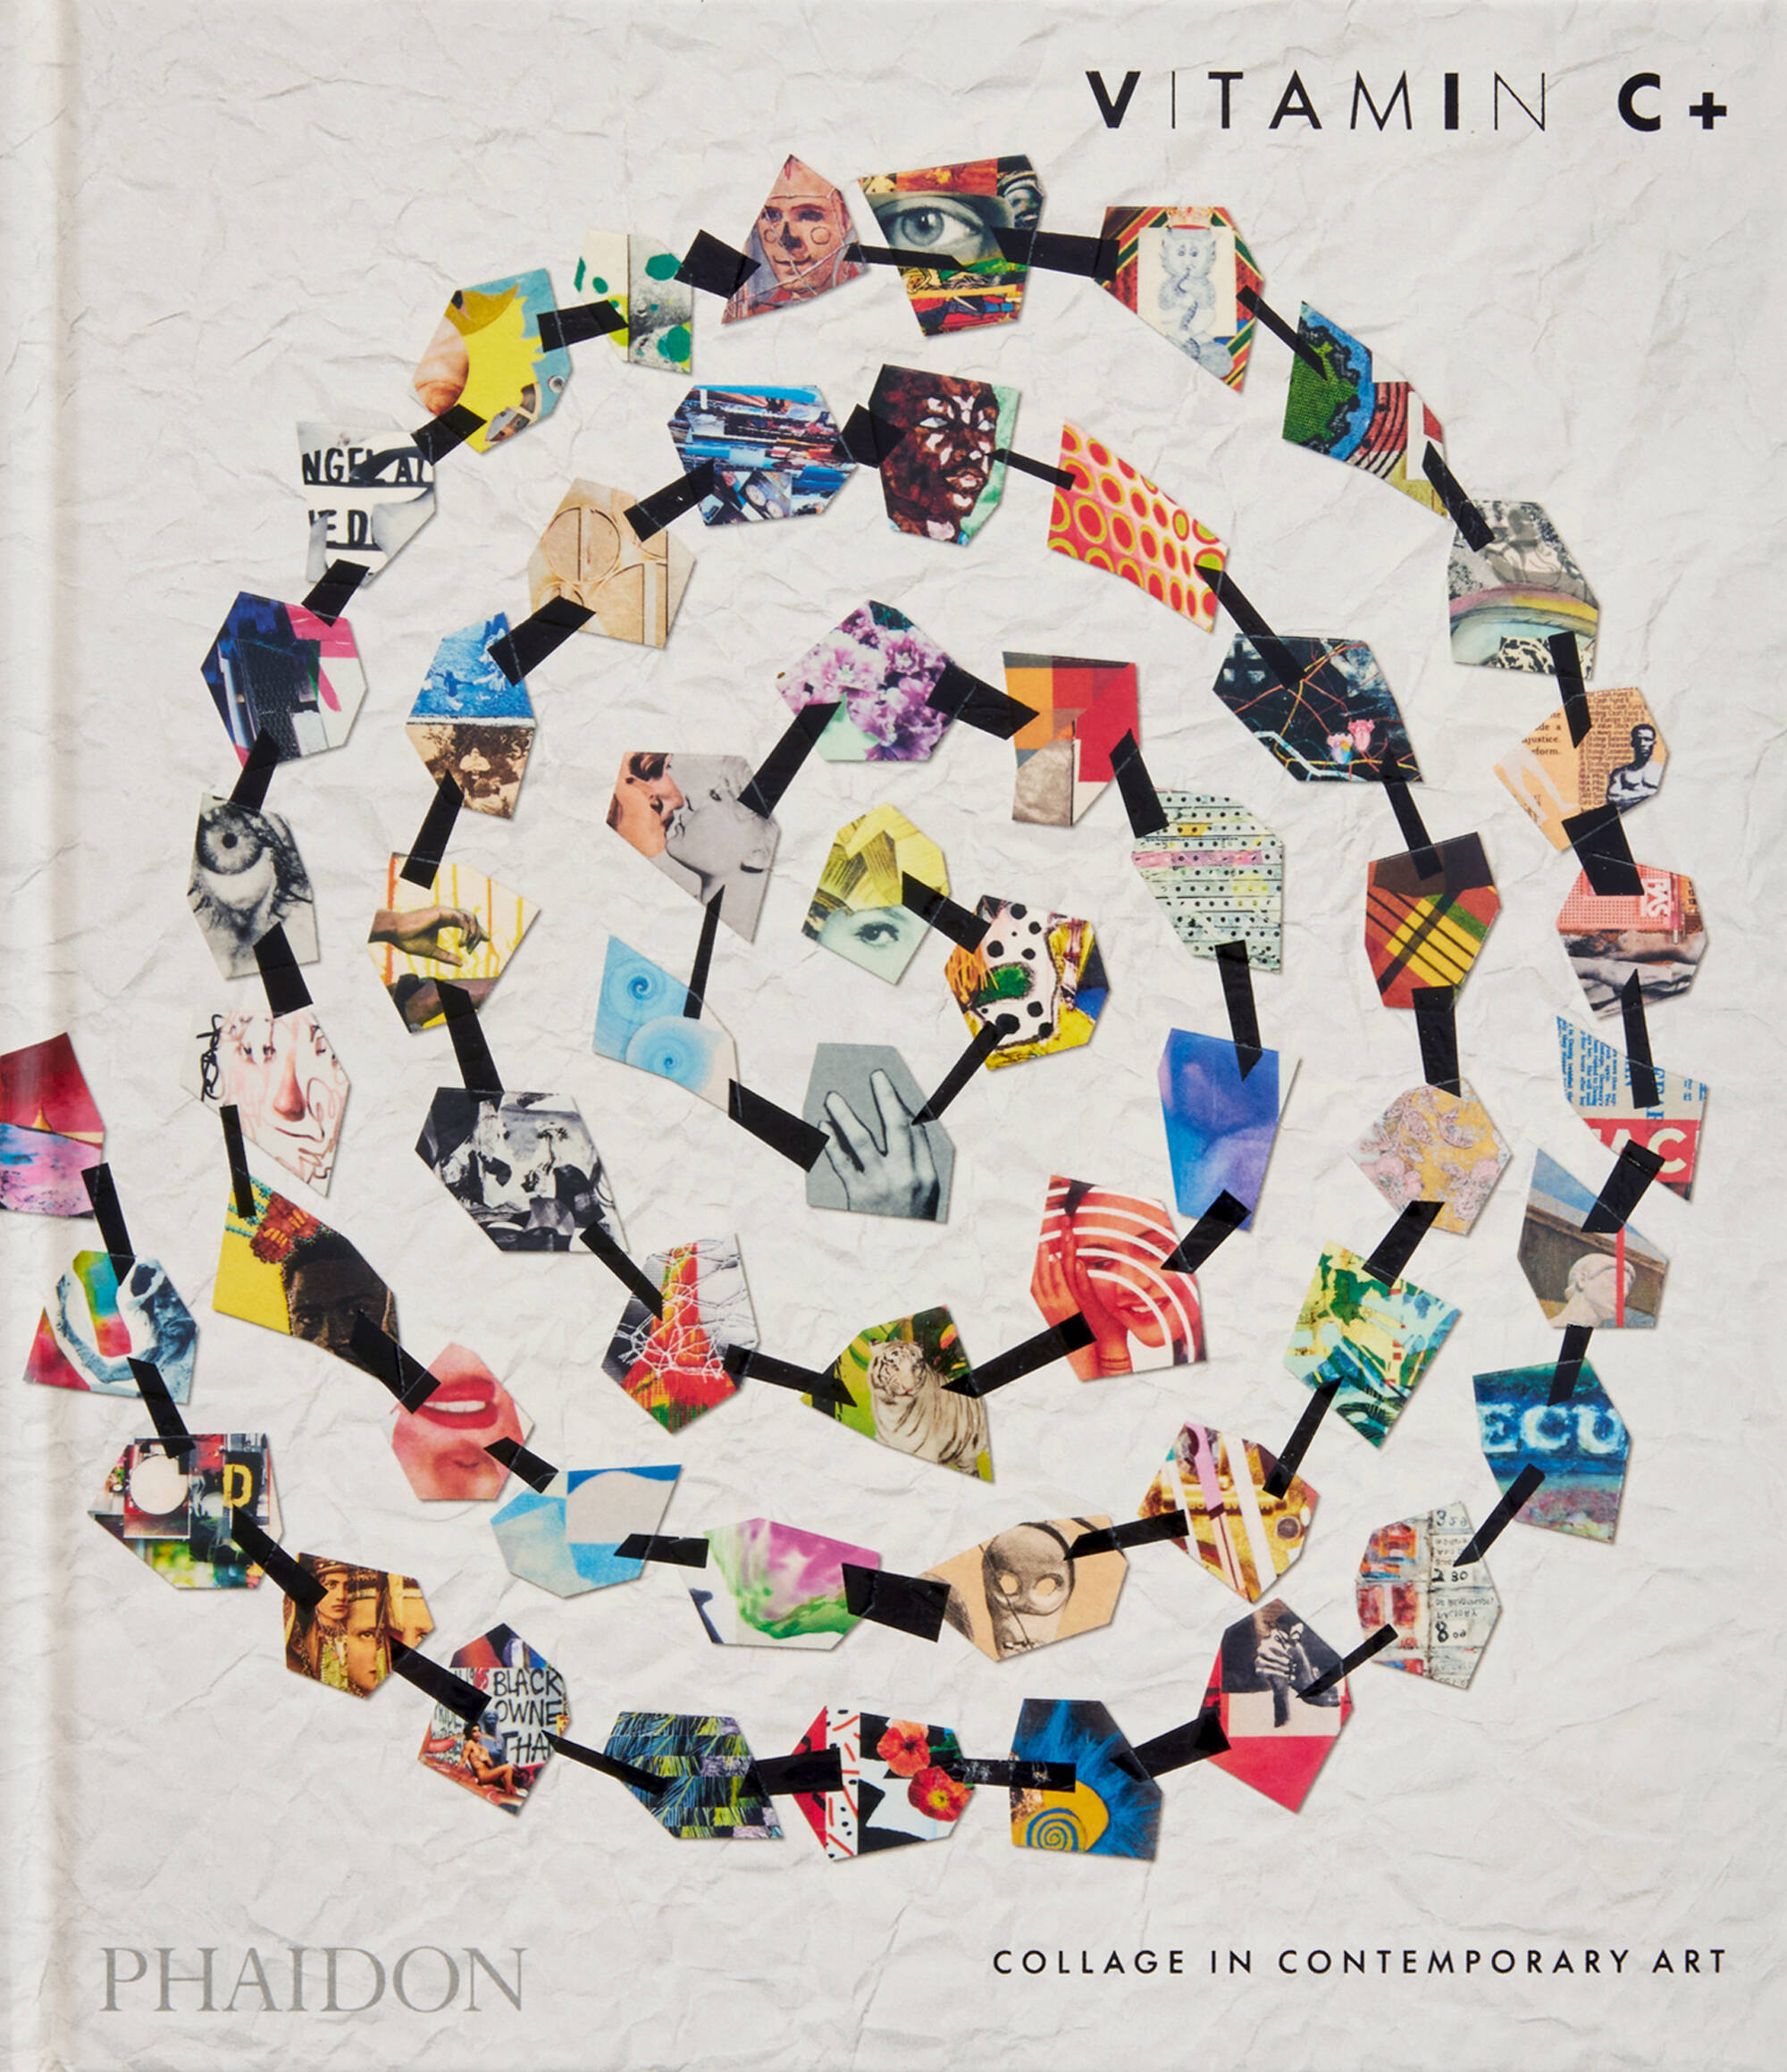 John Stezaker - Why I Make Collage